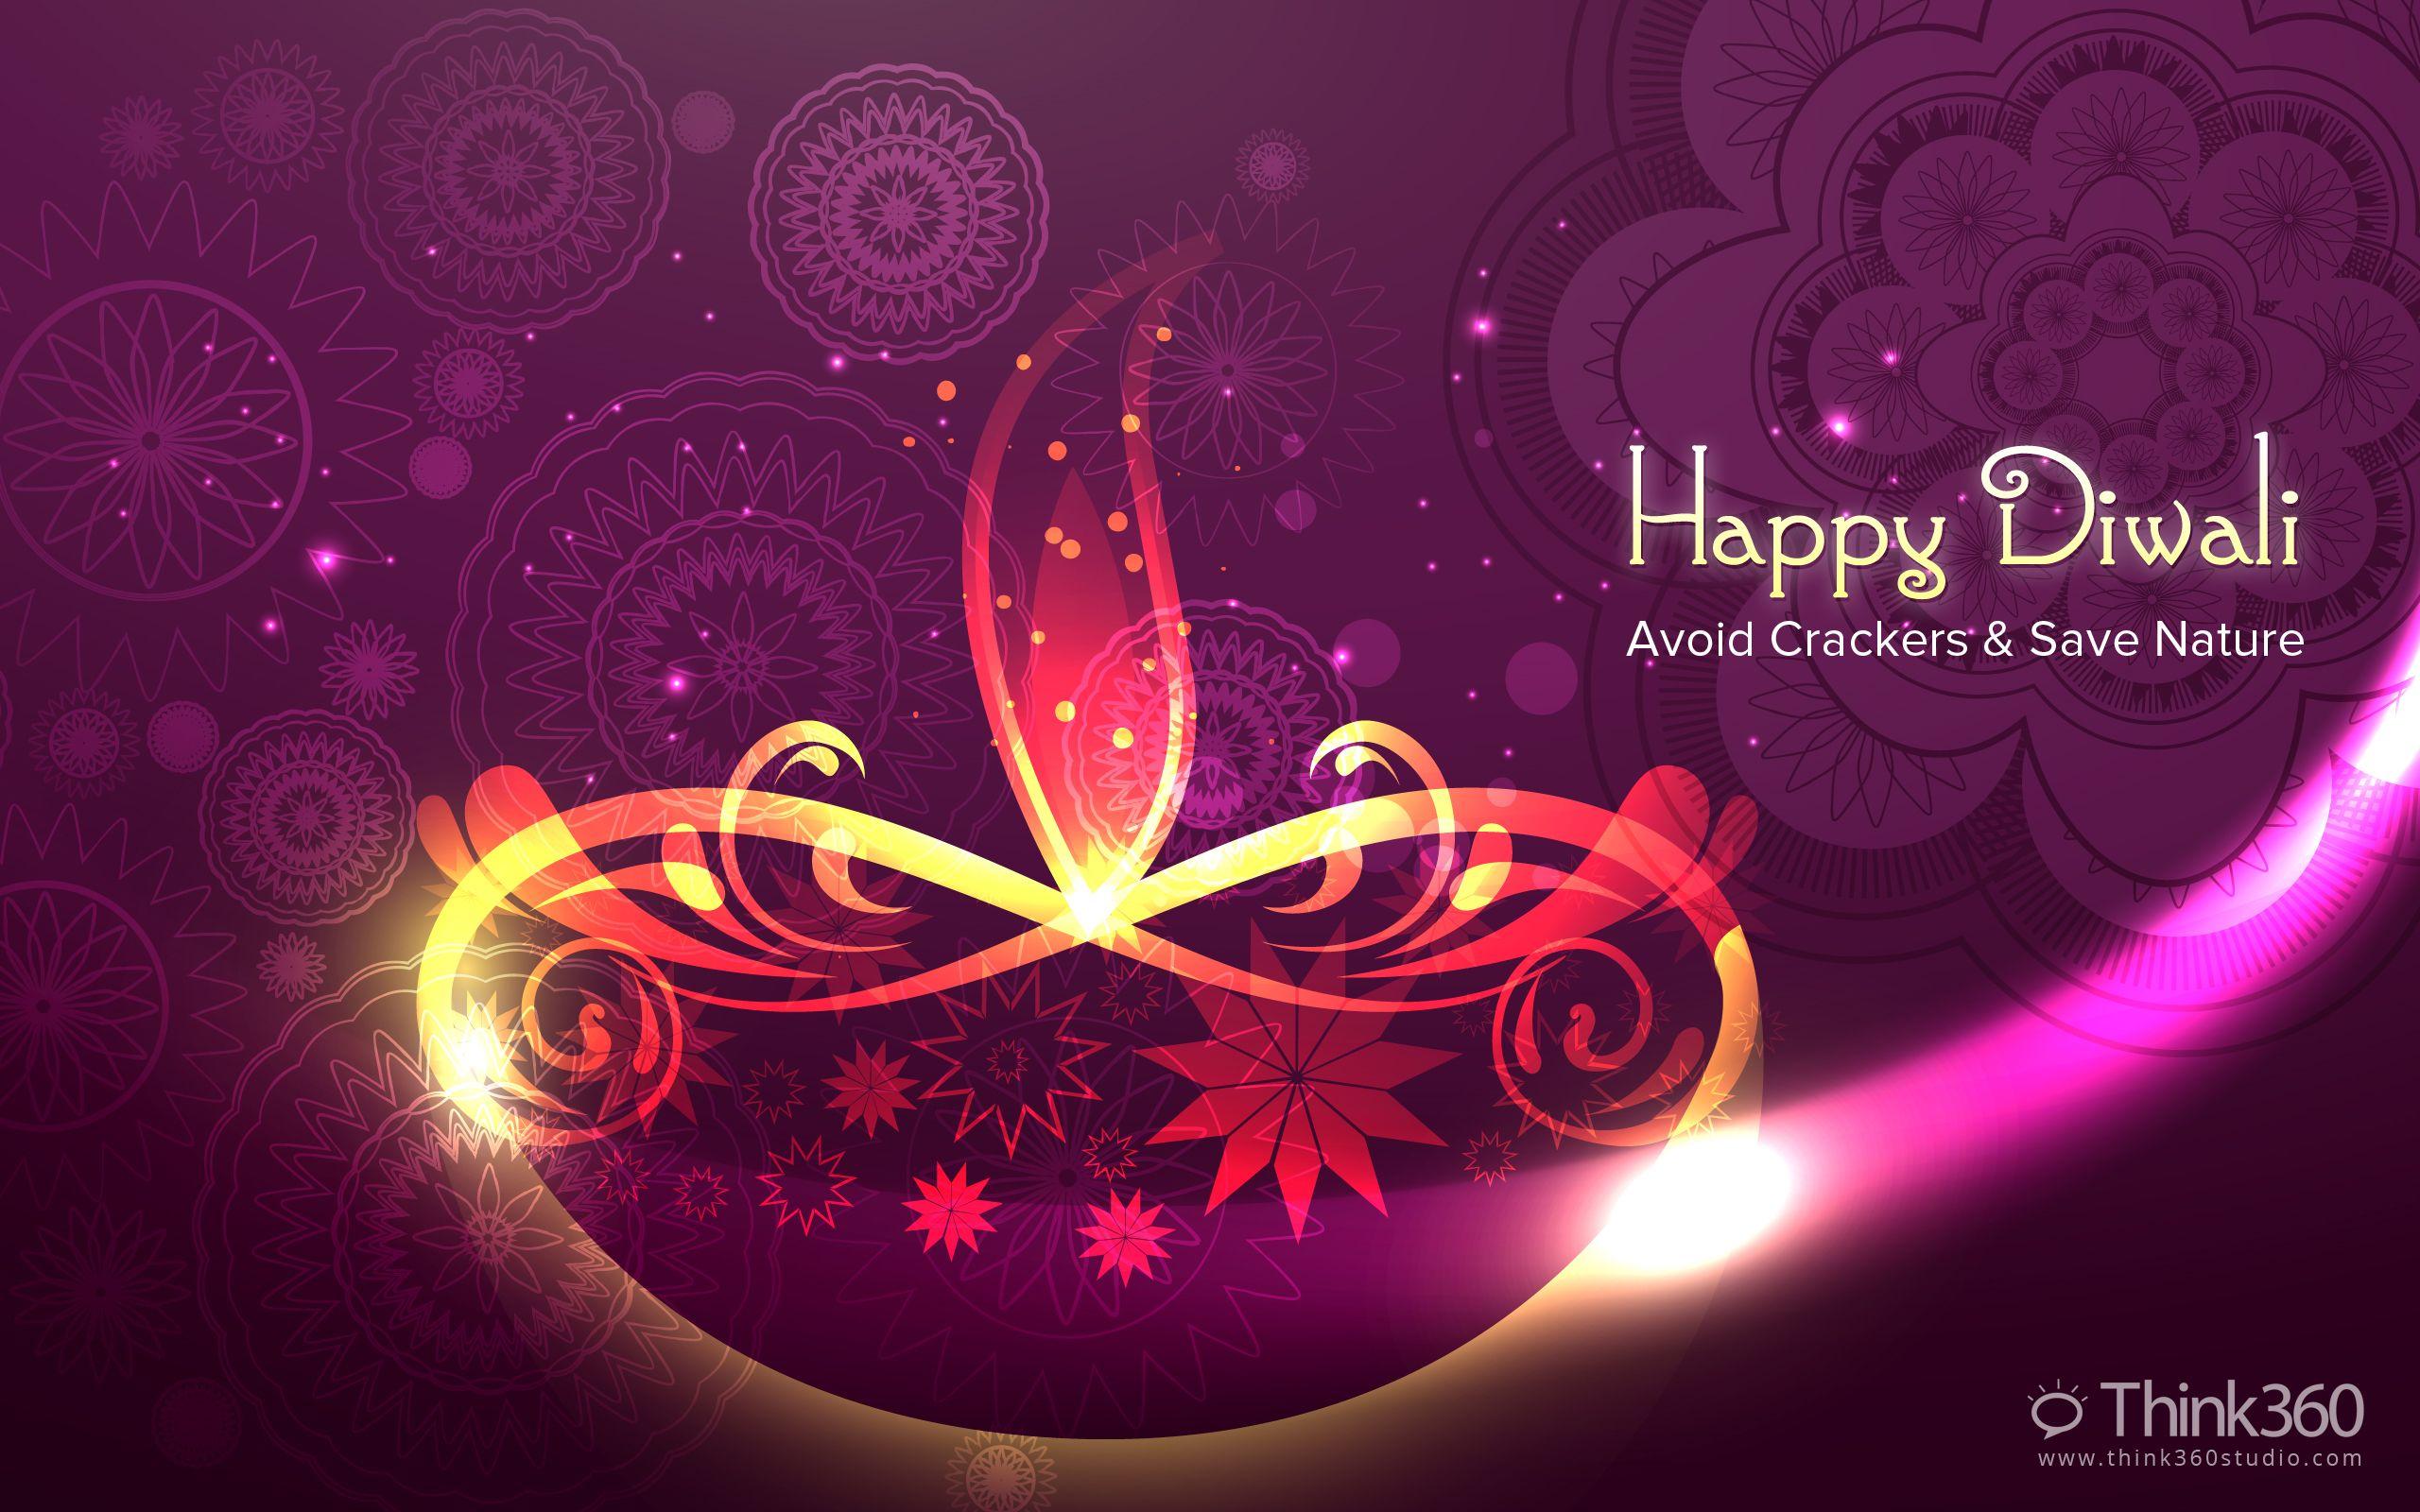 Happy Diwali Wallpaper 360 Studio